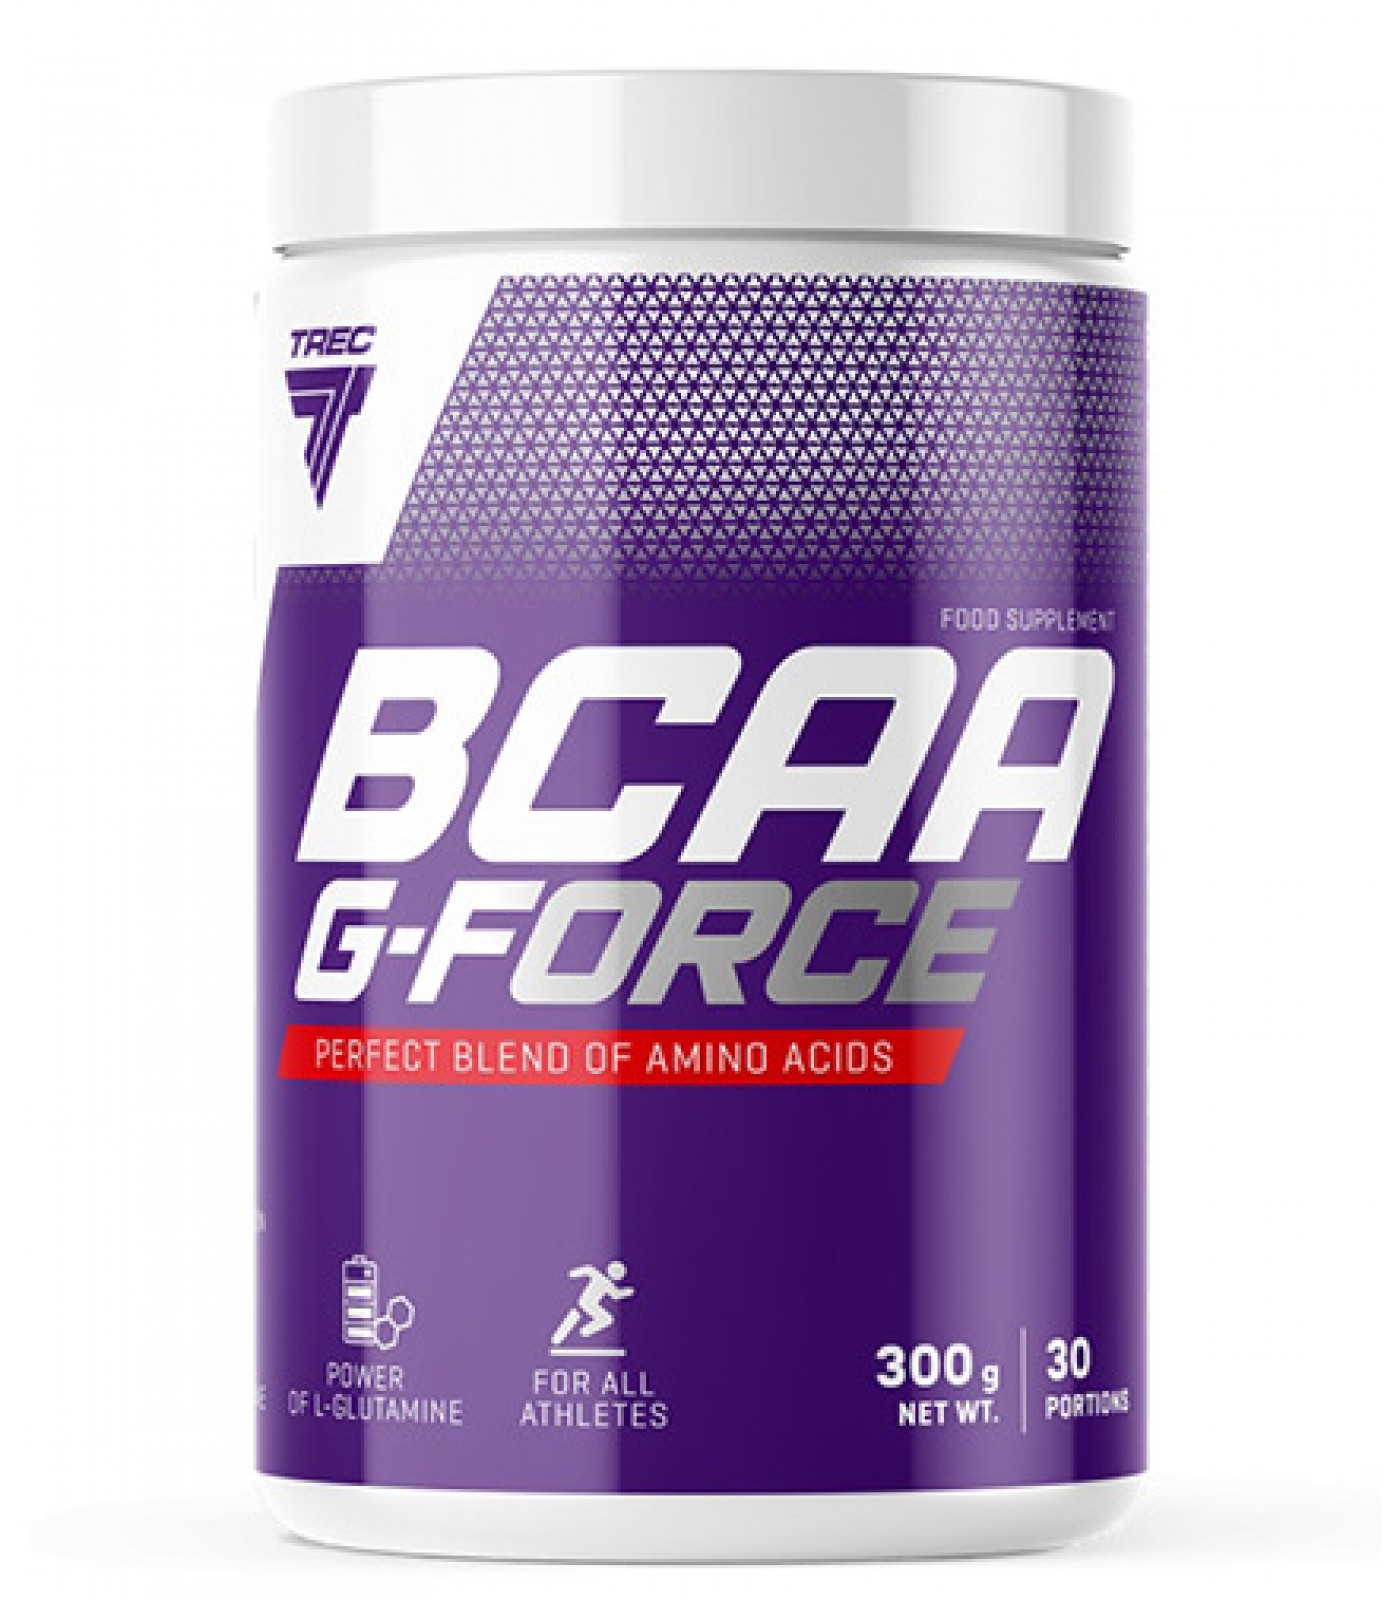 TREC NUTRITION BCAA G-Force | BCAA + Glutamine Powder